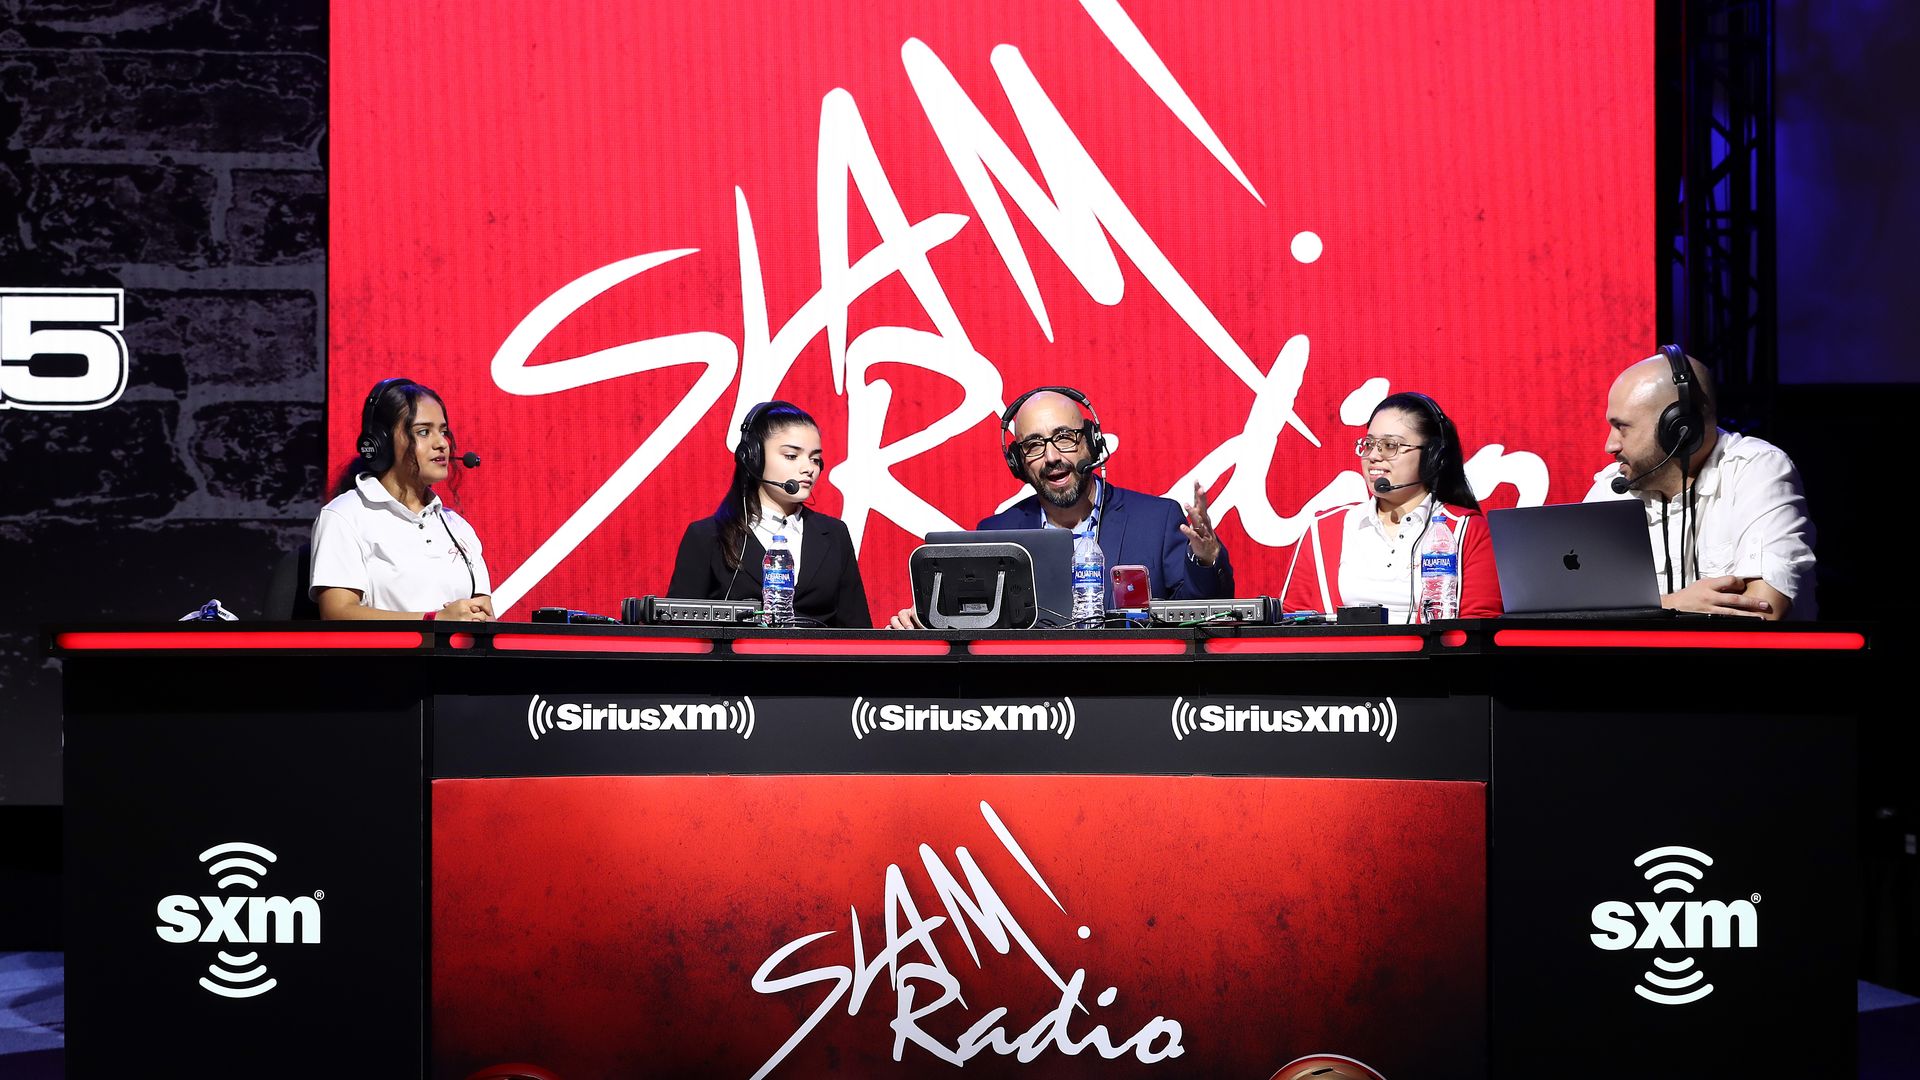 Slam Radio hosts speak onstage during day 2 of SiriusXM at Super Bowl LIV 